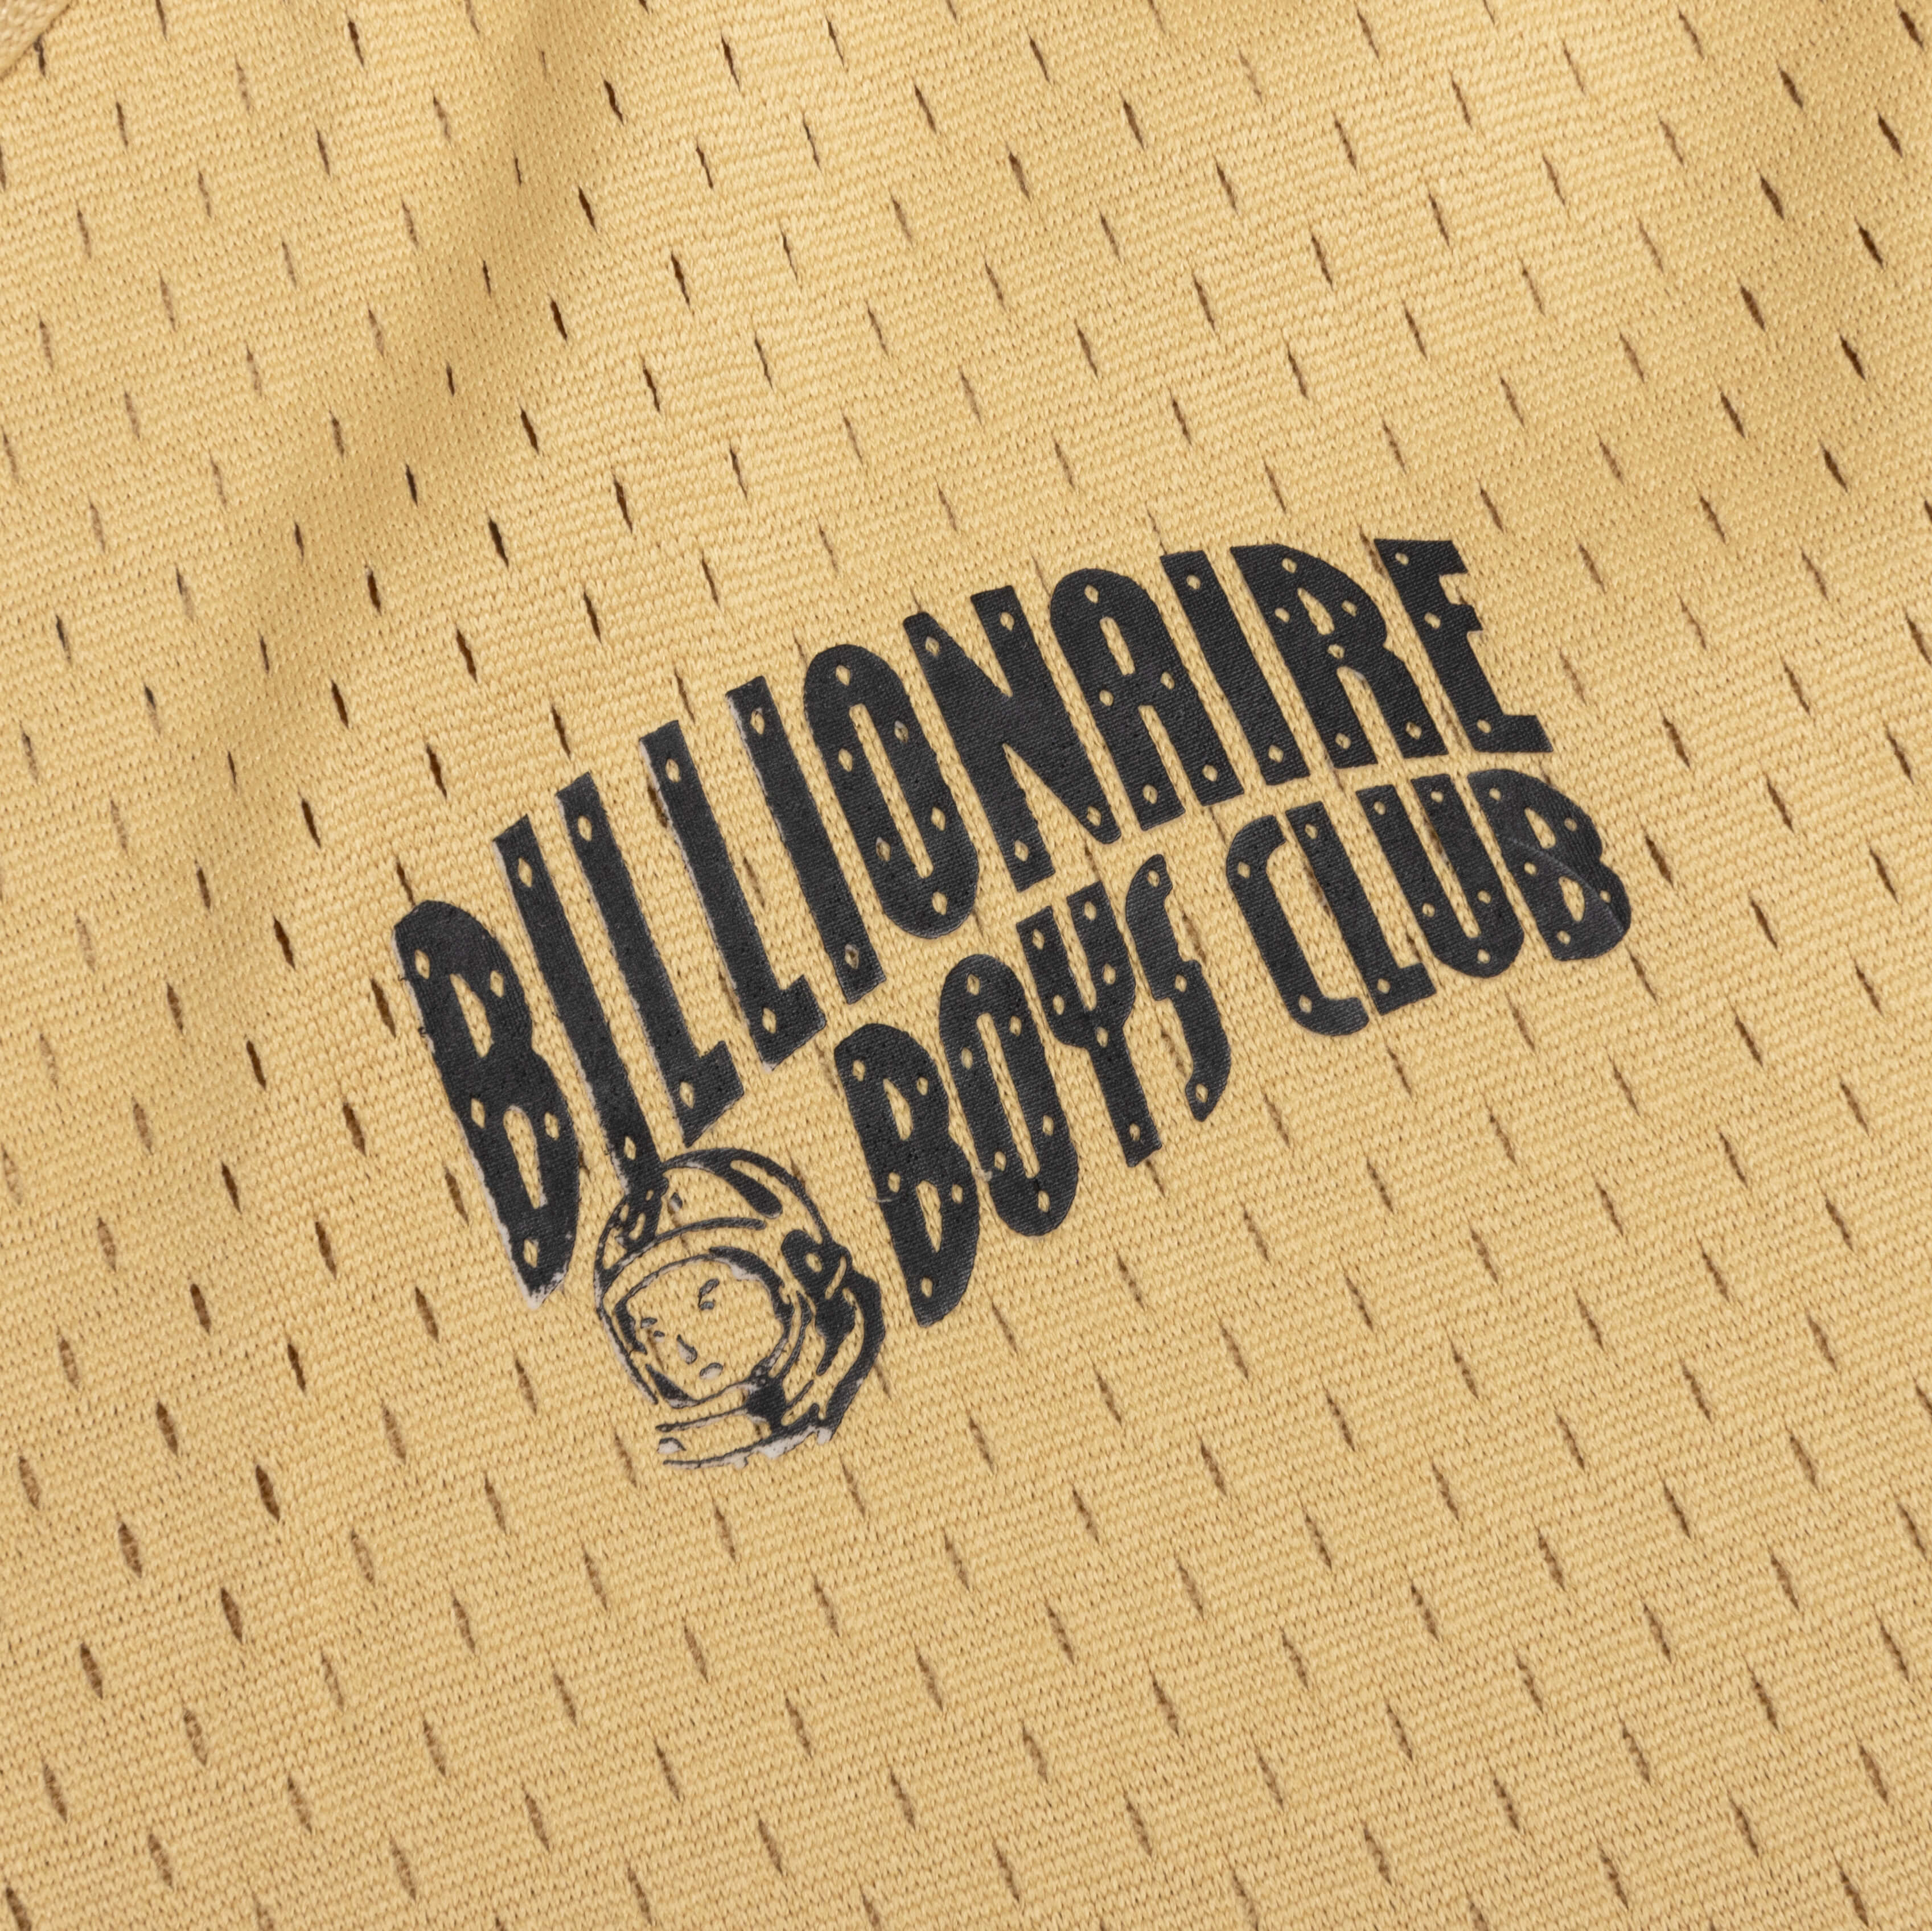 billionaire boys club logo wallpaper